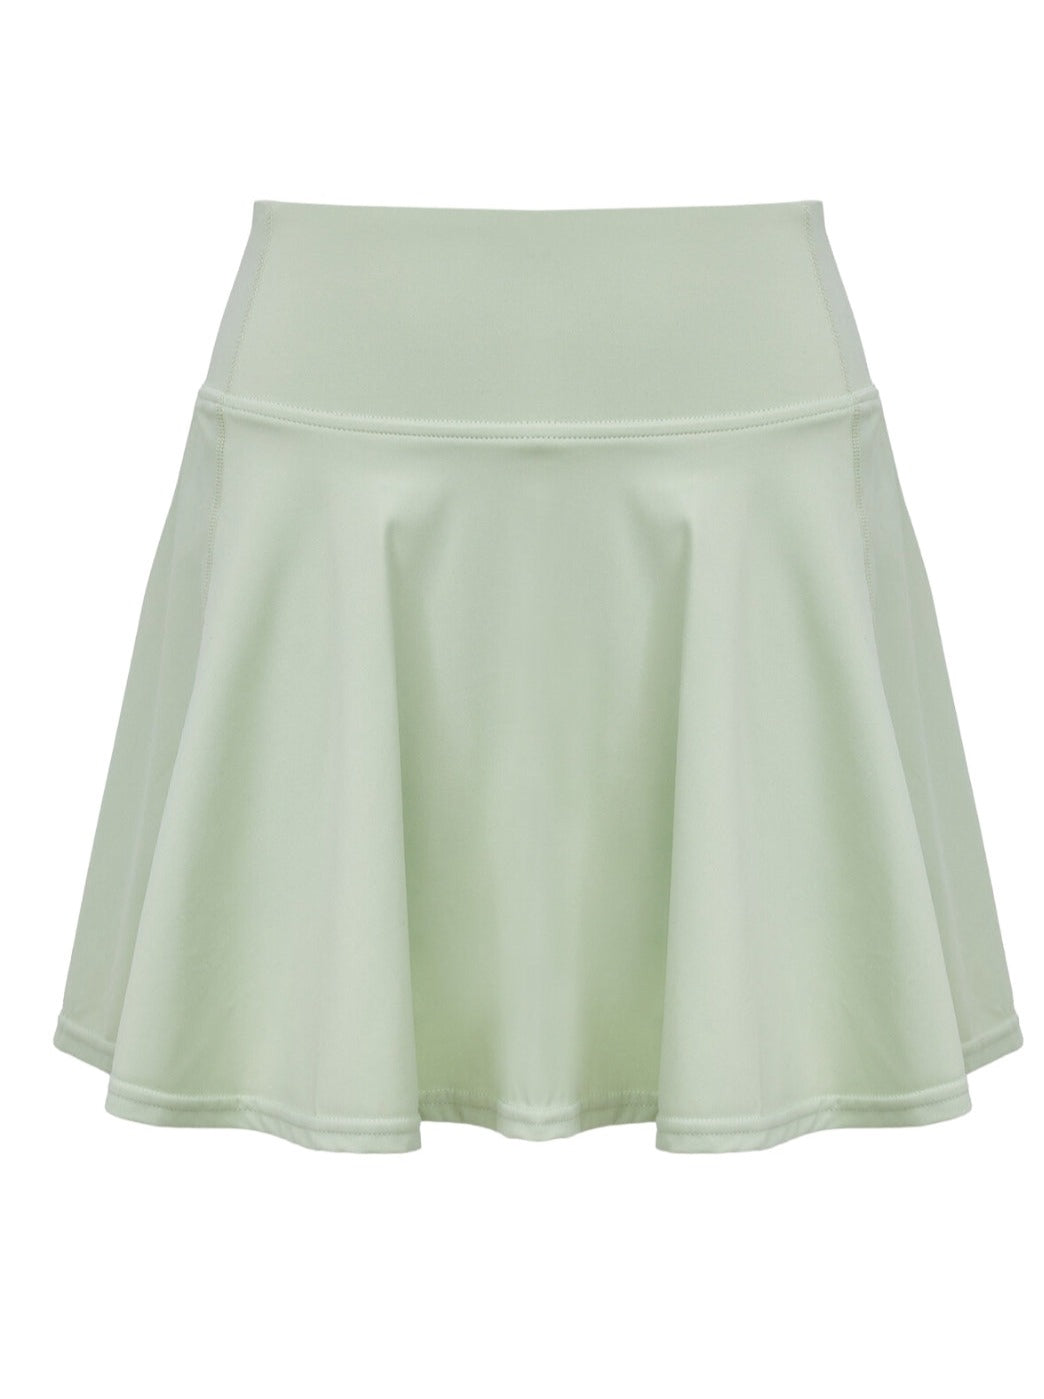 Leisure Tennis Skirt in Matcha (1 LEFT)